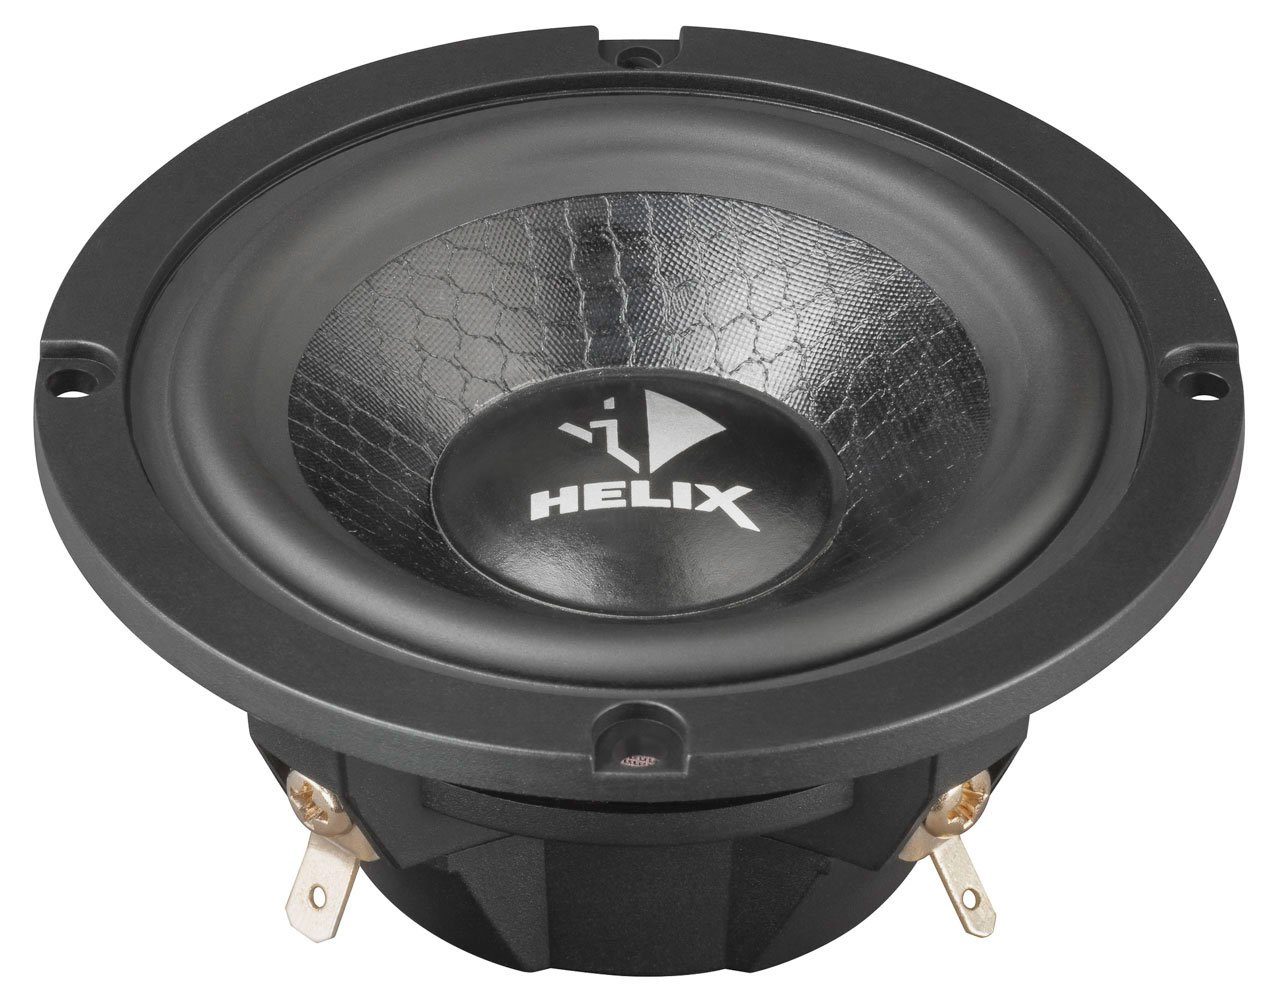 Helix P 3M 75mm Mitteltöner Auto-Lautsprecher (MAX: Watt)